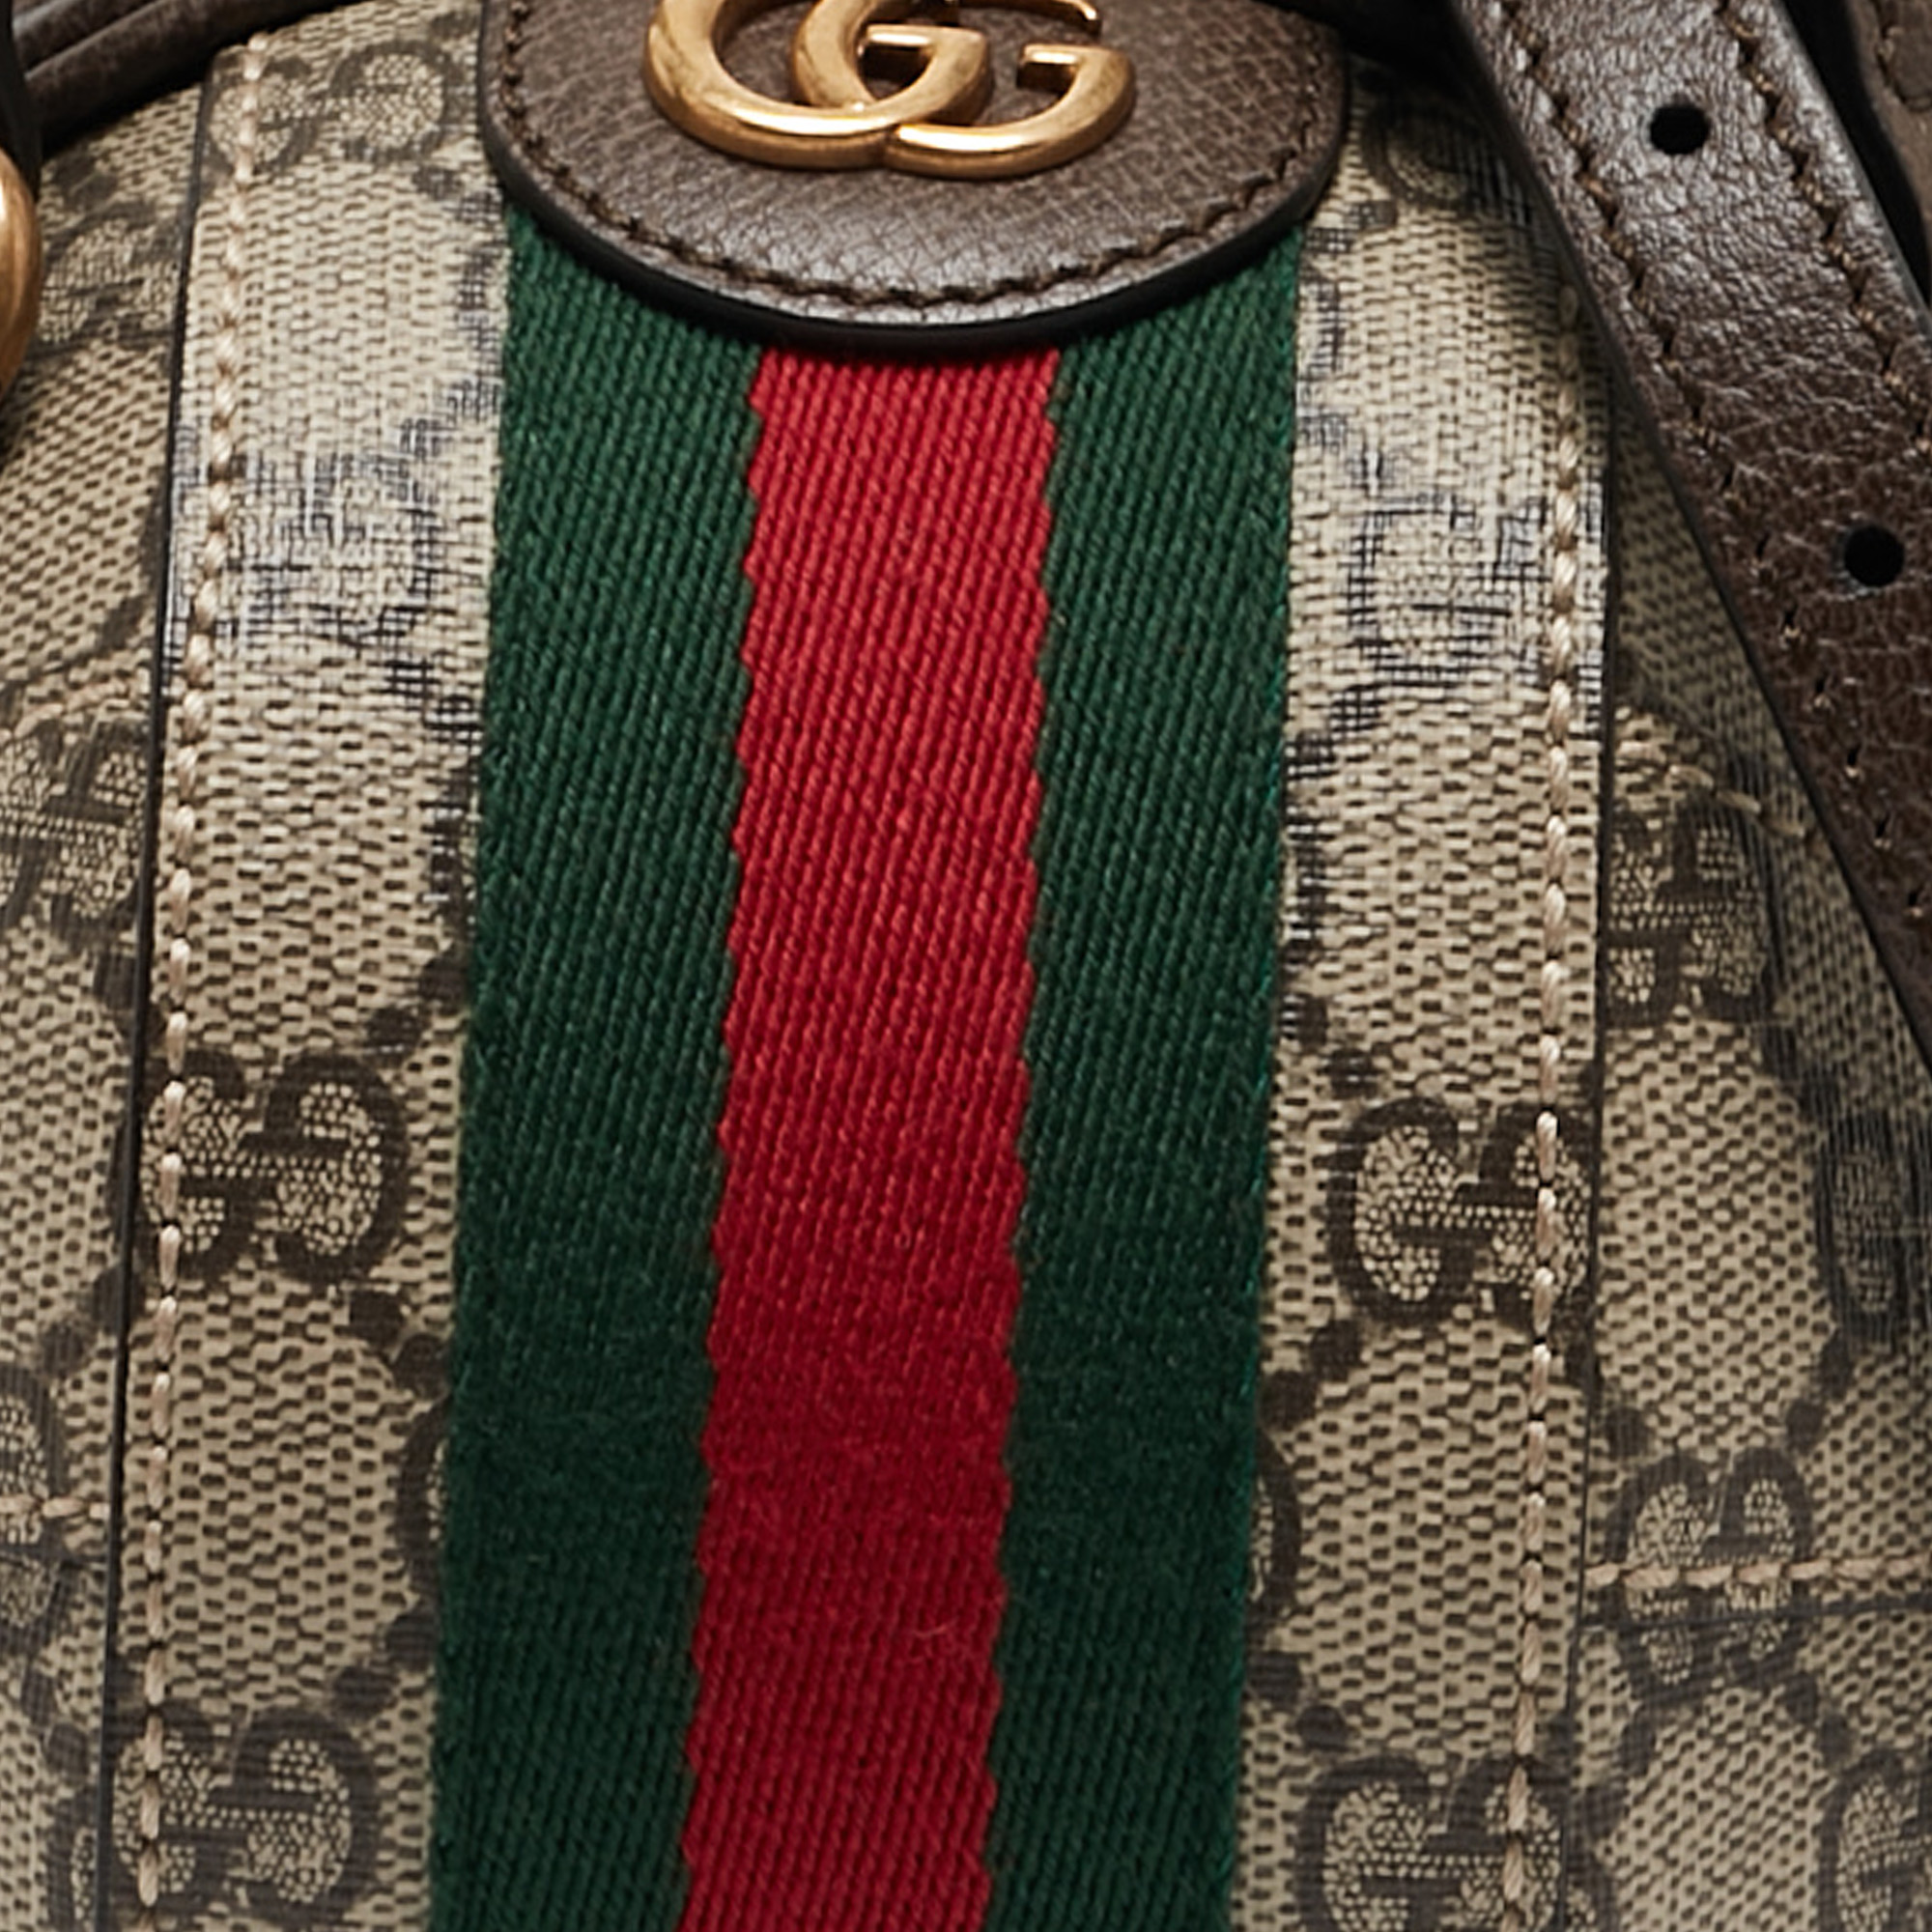 Gucci Beige/Ebony GG Supreme Canvas Mini Ophidia Basketball Bag